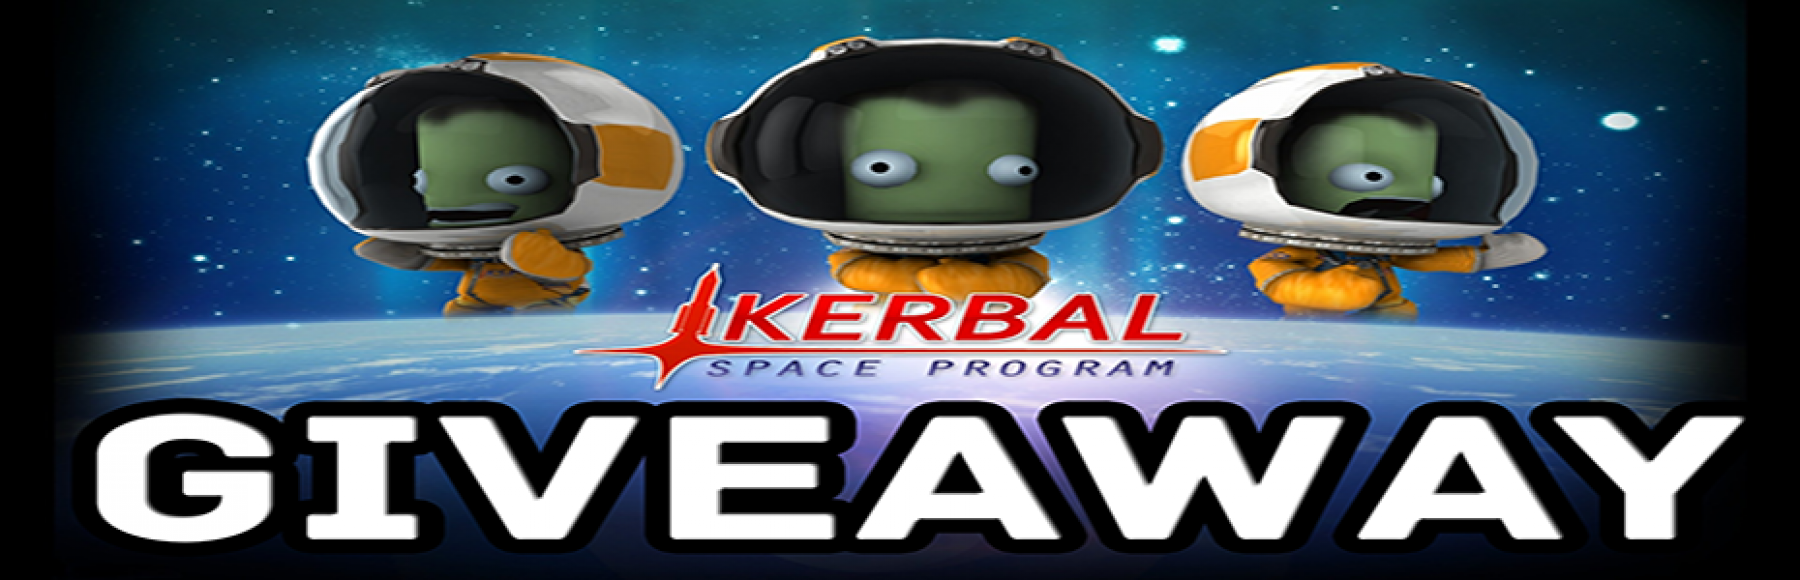 download free kerbal space program 1